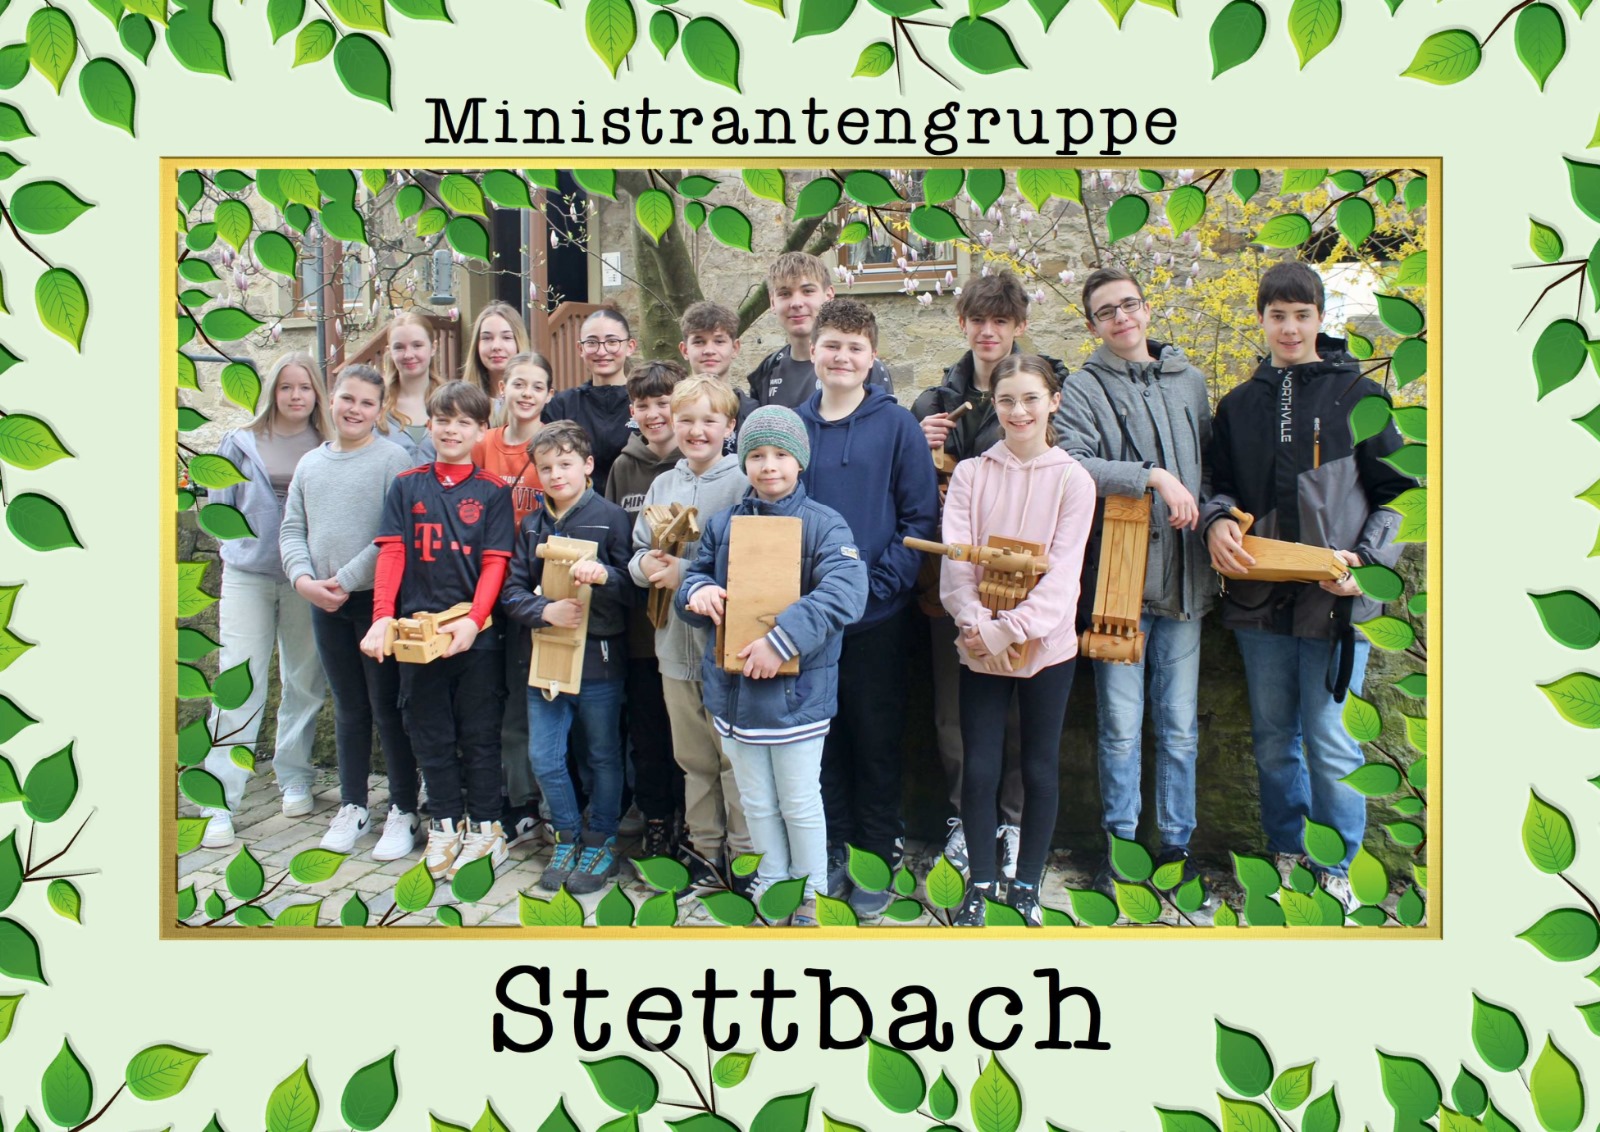 Stettbacher Ministranten